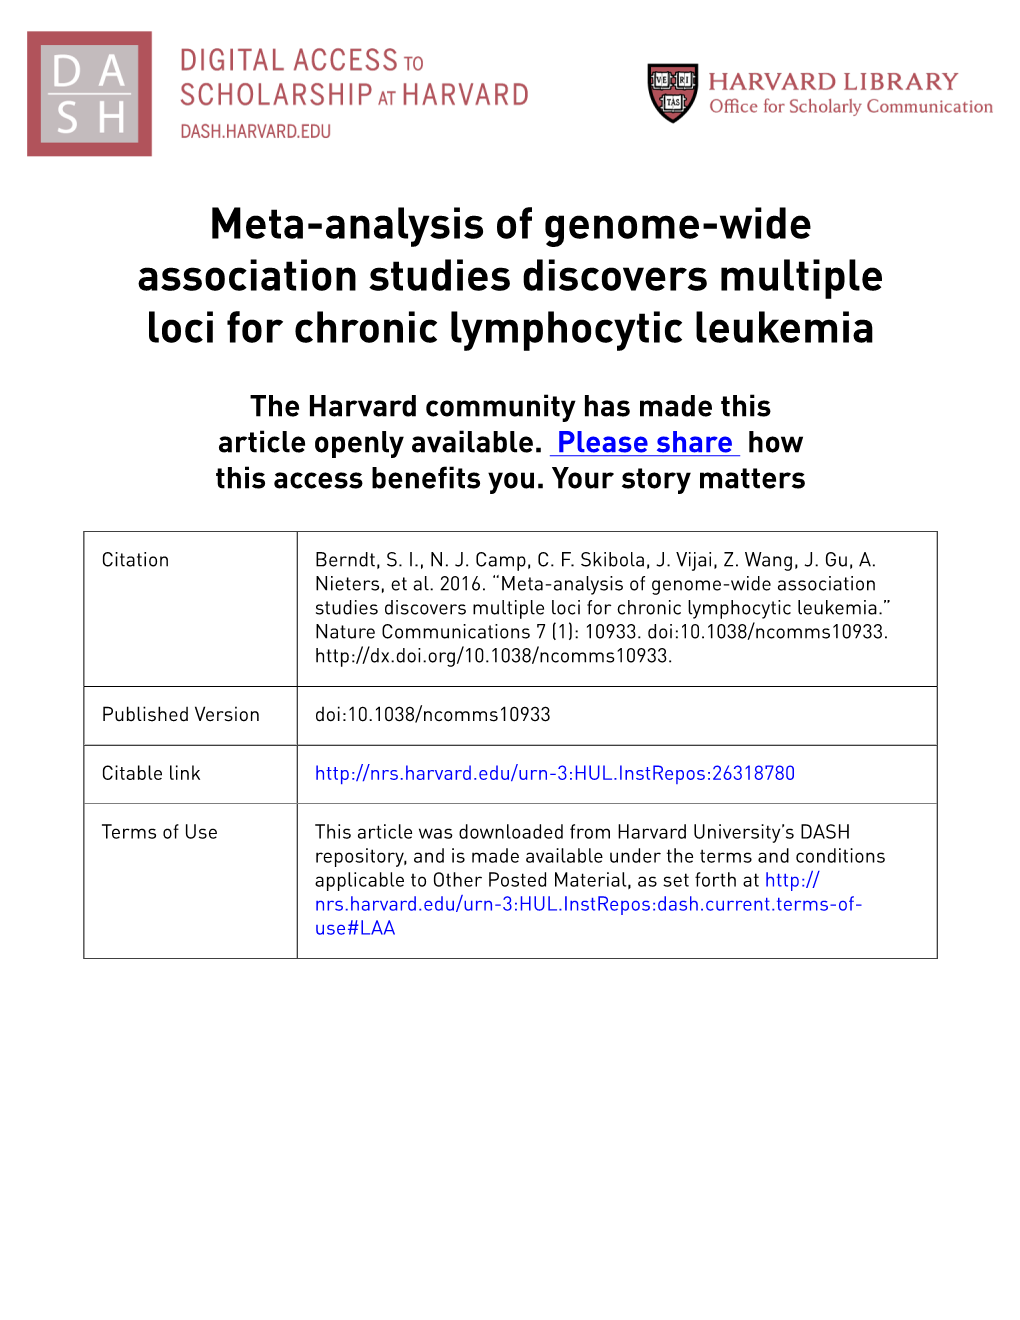 Meta-Analysis of Genome-Wide Association Studies Discovers Multiple Loci for Chronic Lymphocytic Leukemia